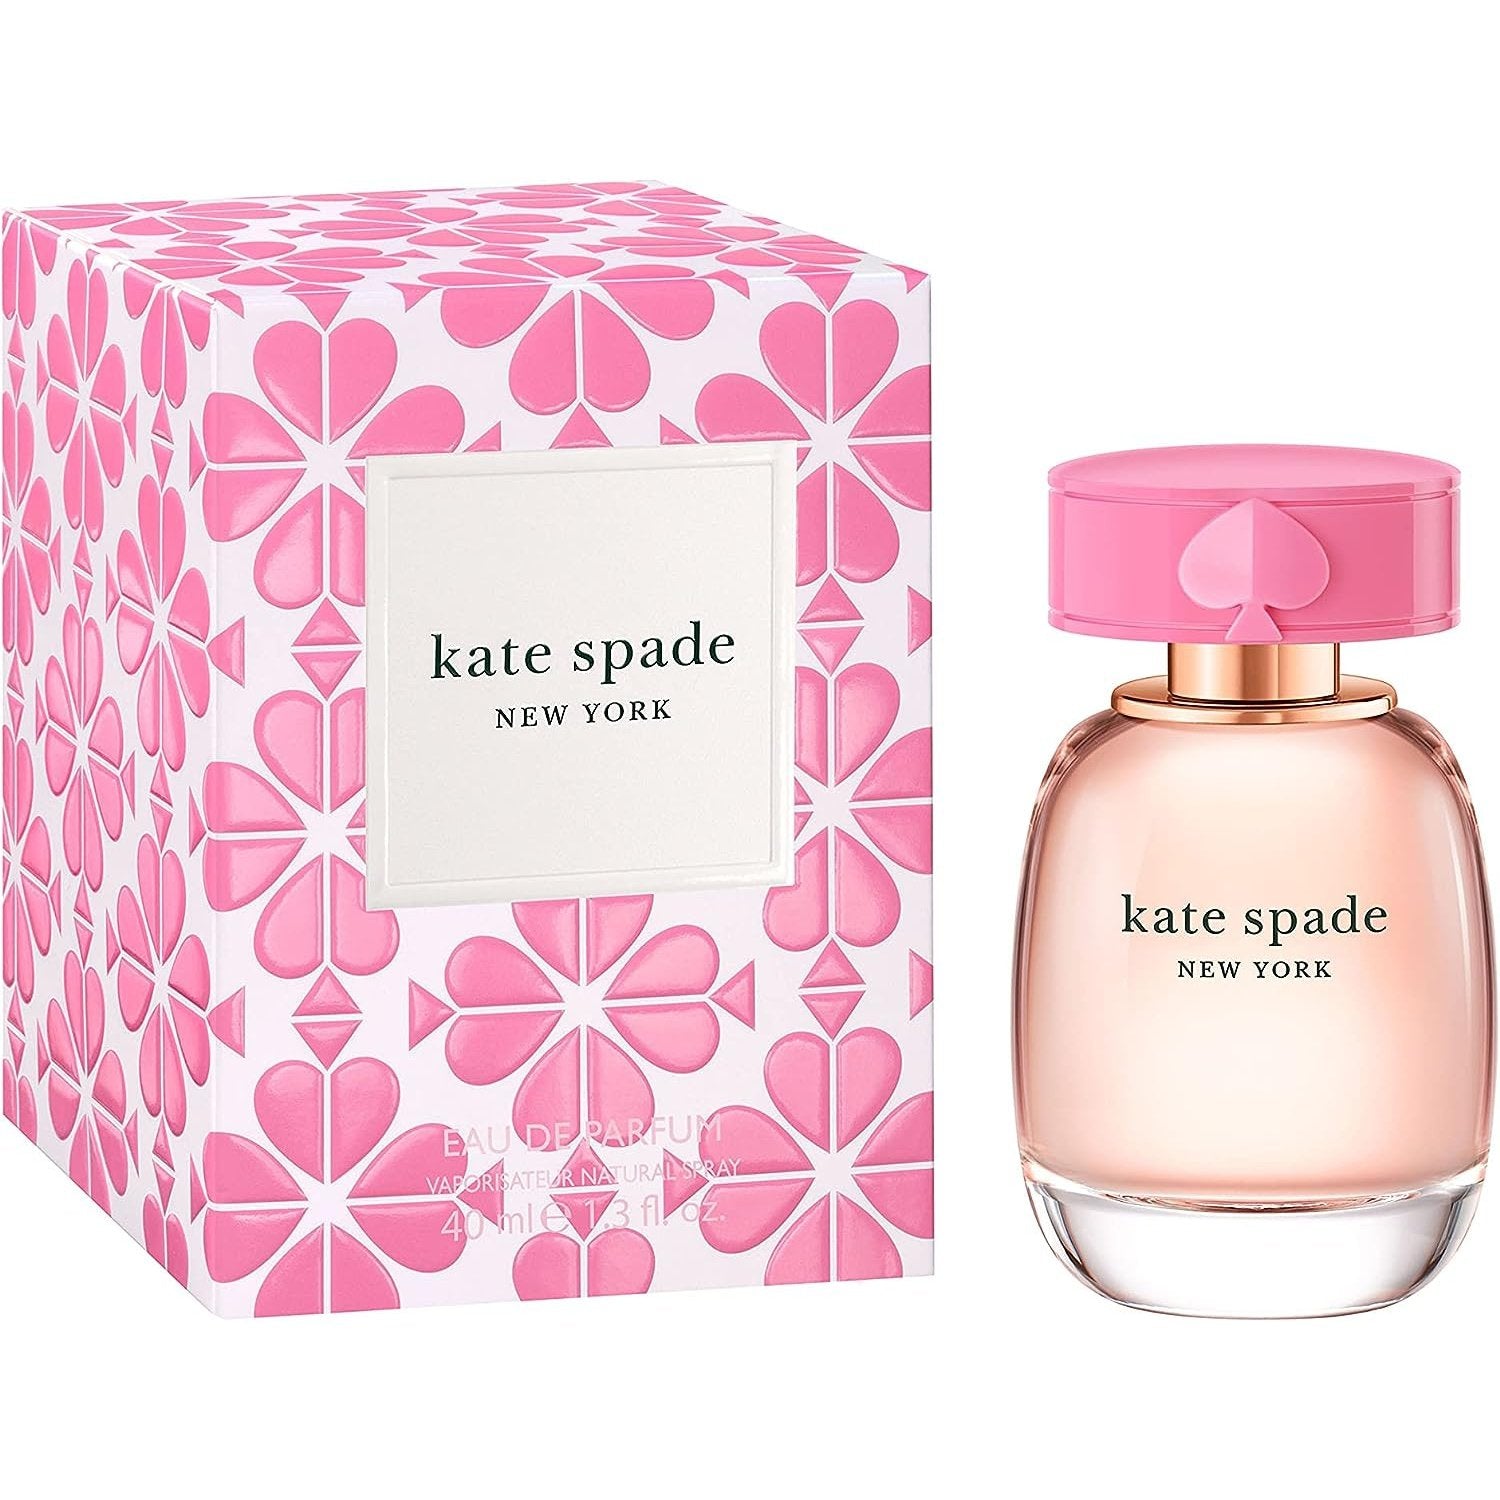 Kate Spade New York Eau de Parfum 40ml Spray